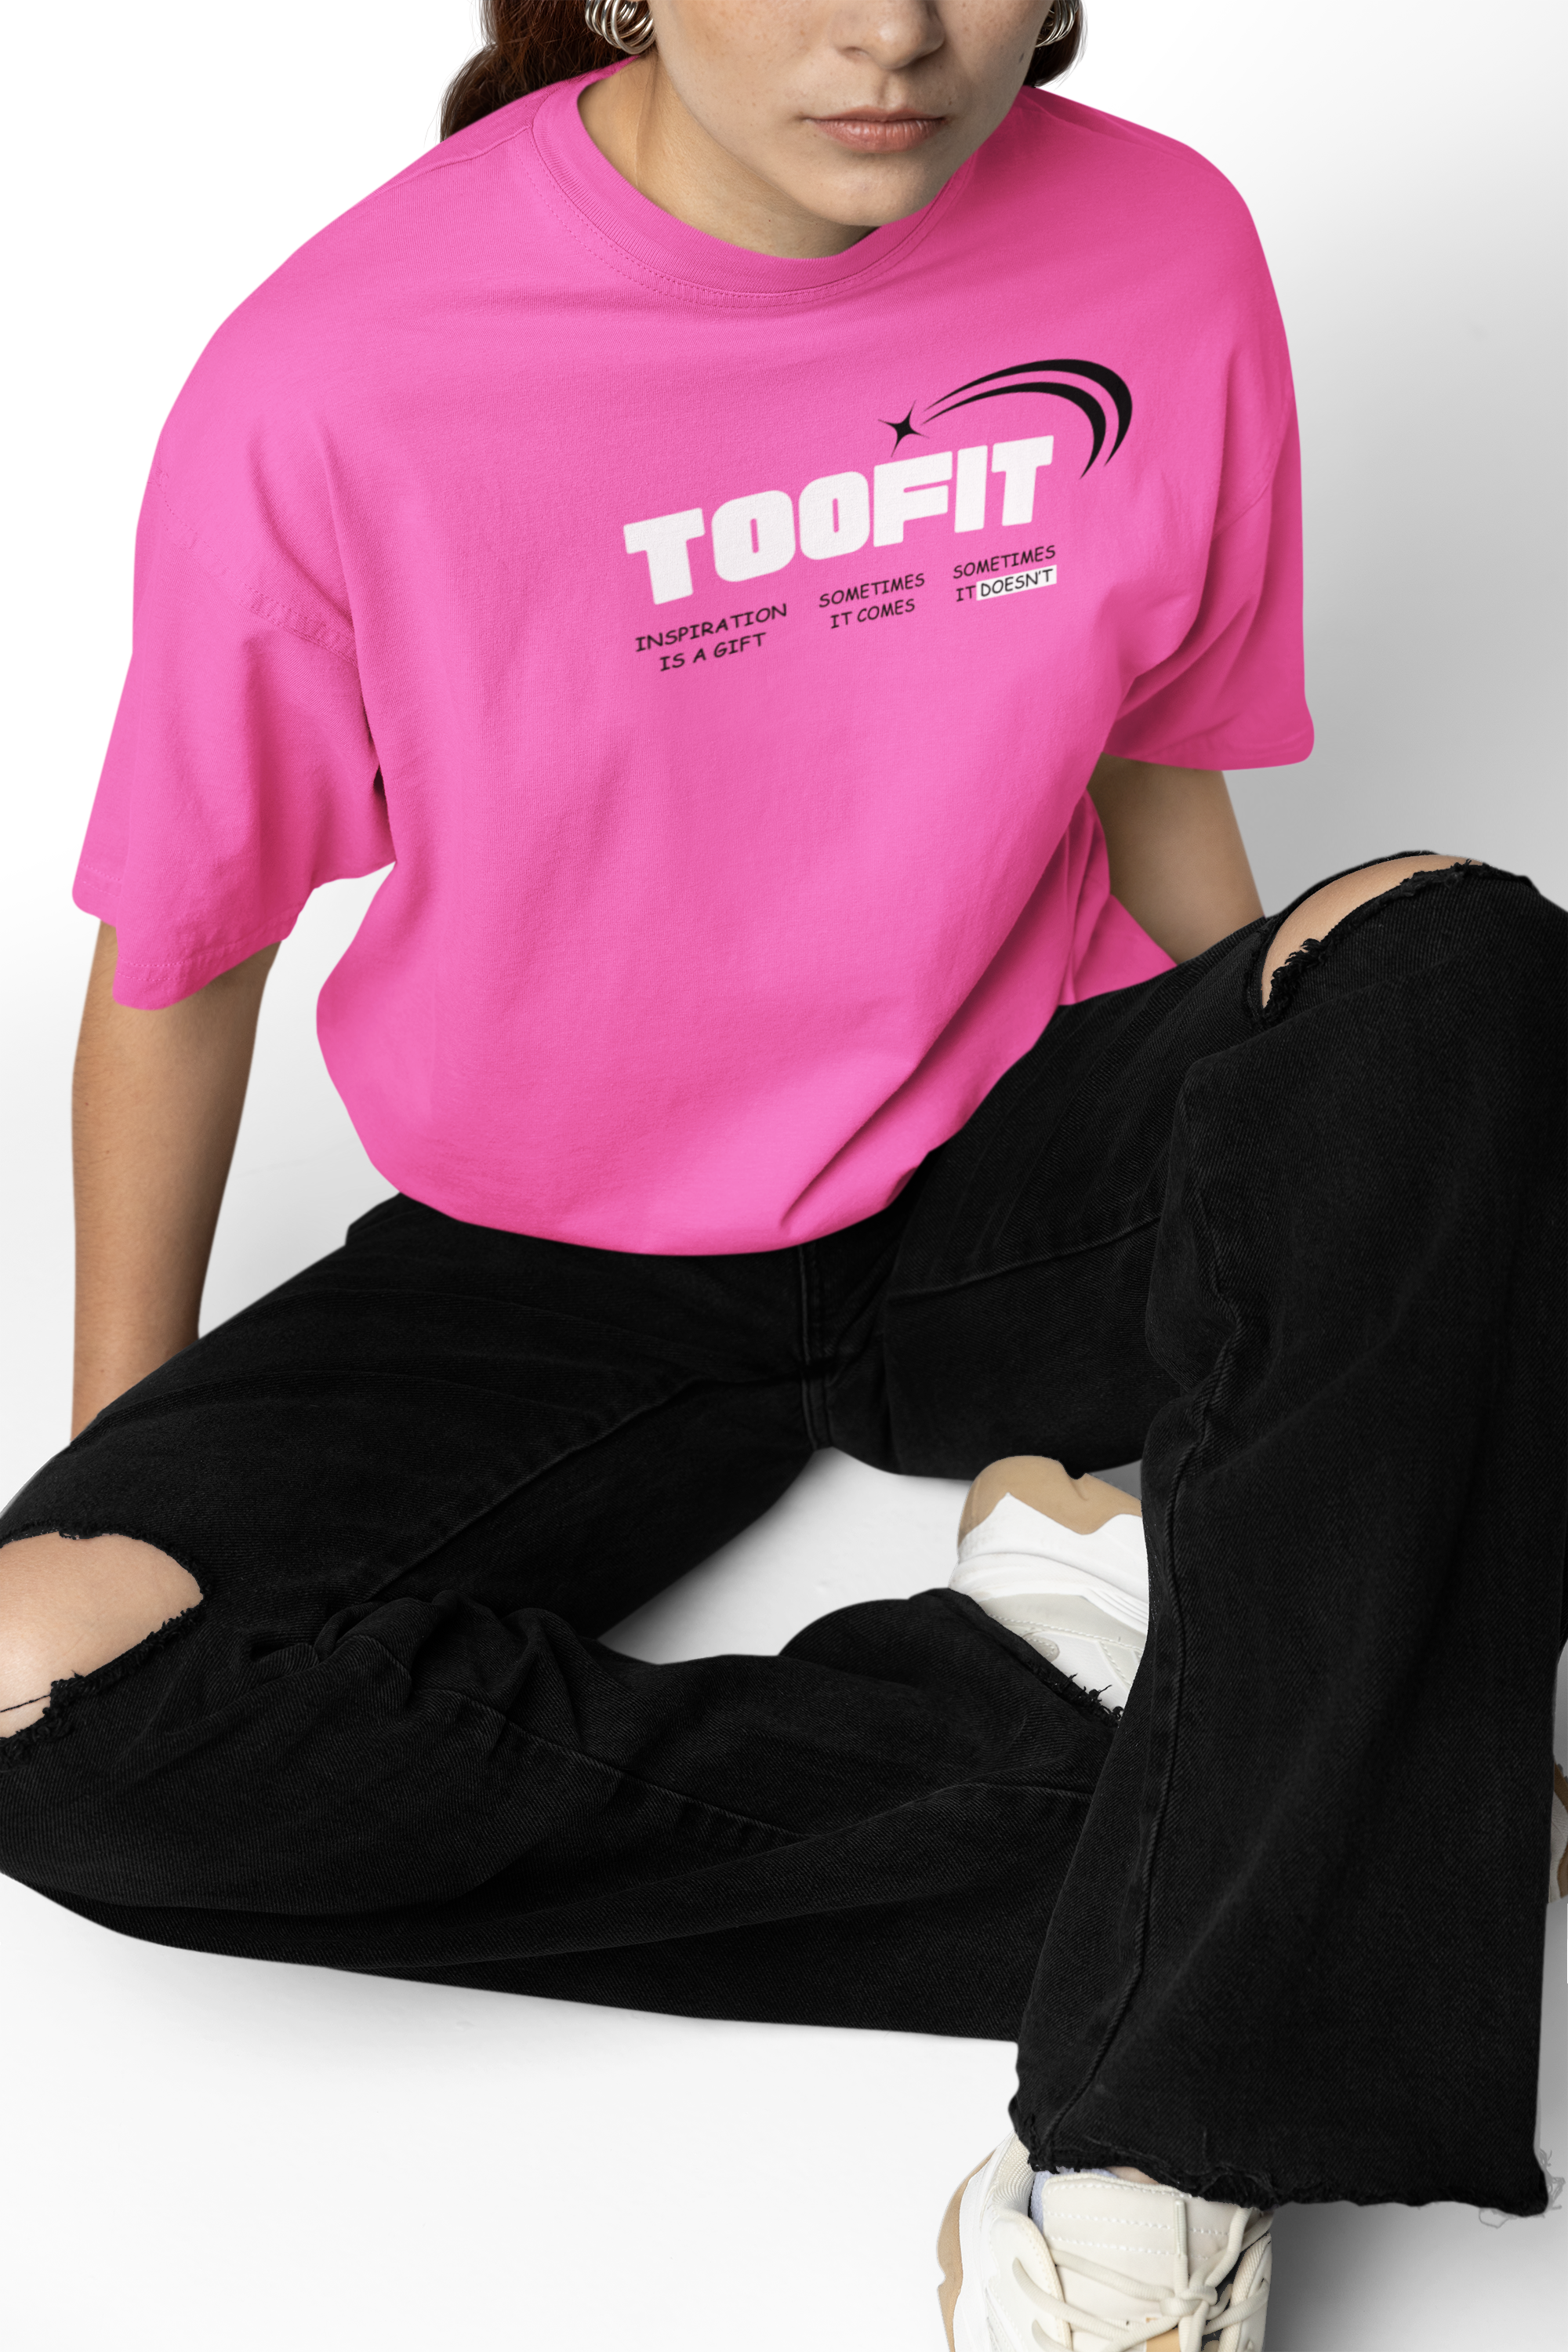 TOOFIT- women pink Tshirt